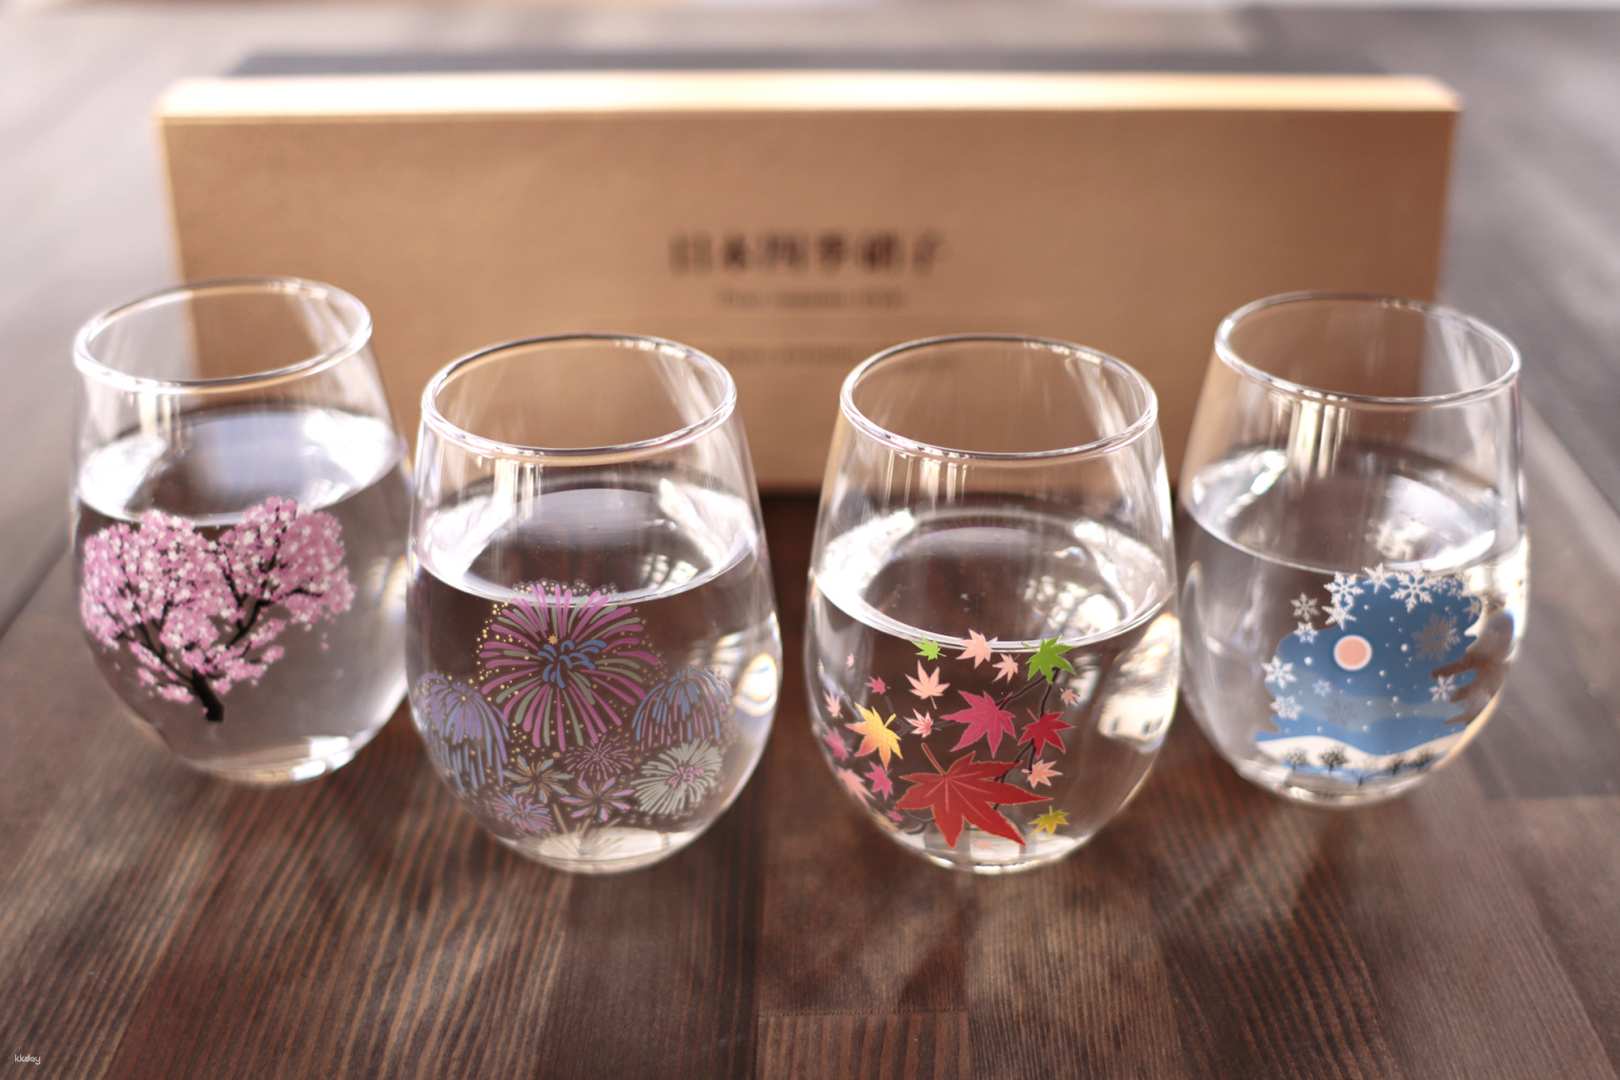 Special tour in showroom & Japanese souvenir glasses with surprising trick | Tajimi, Gifu